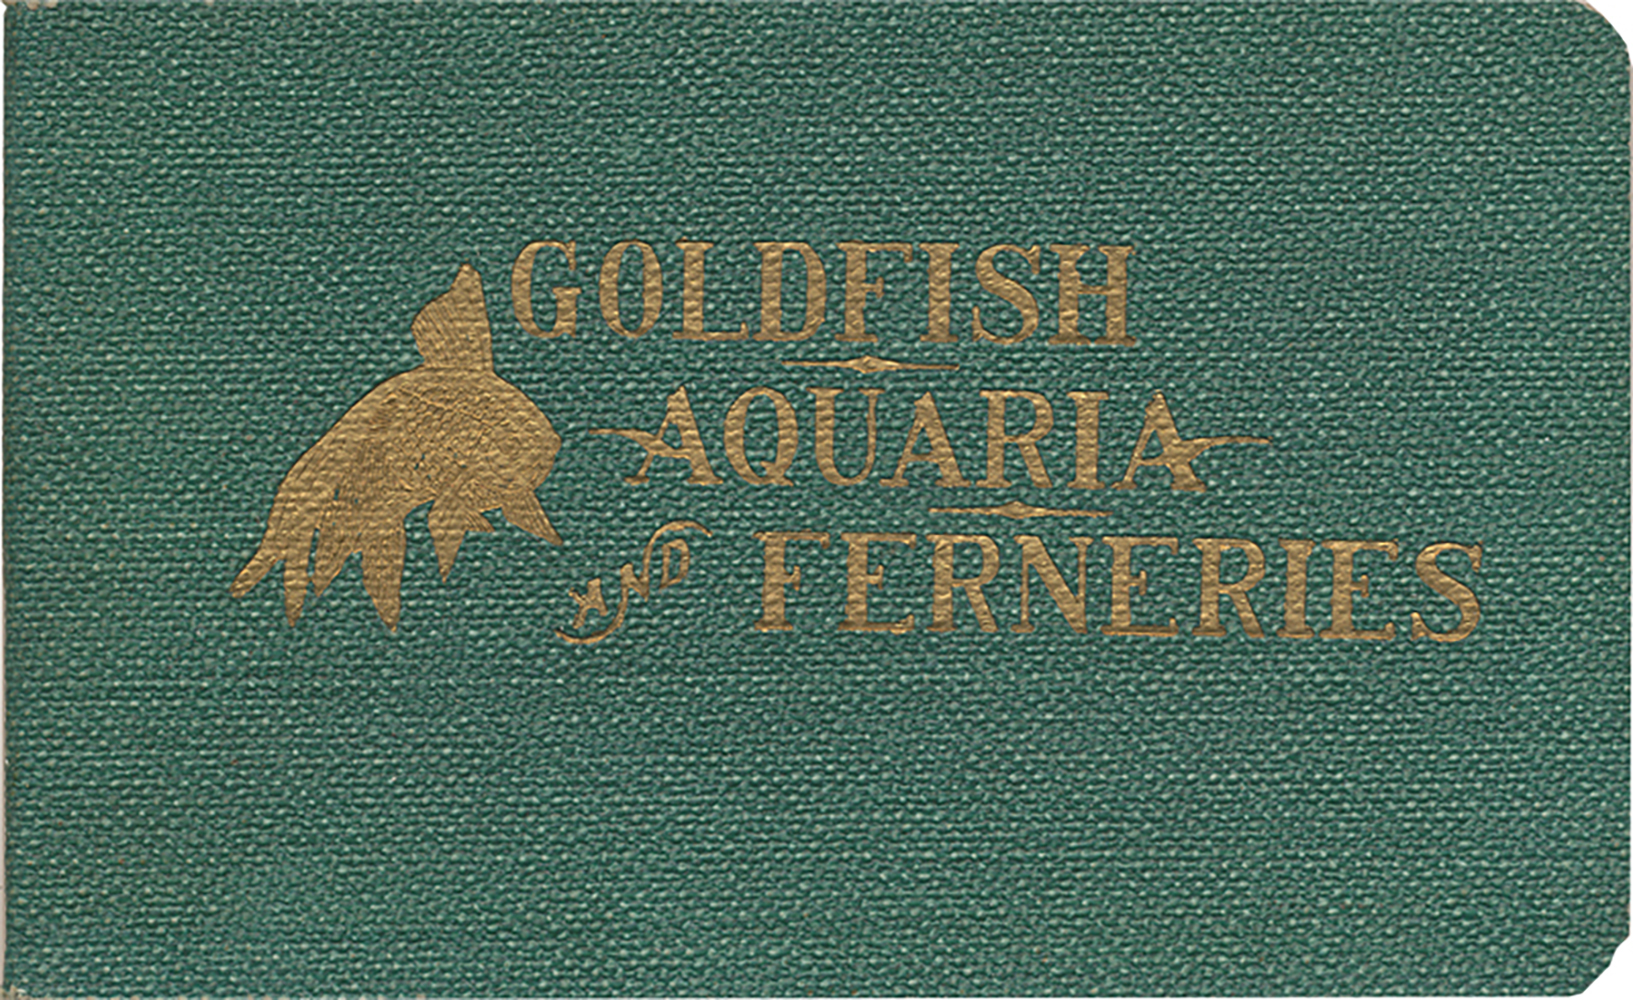 Goldfish-1908-800